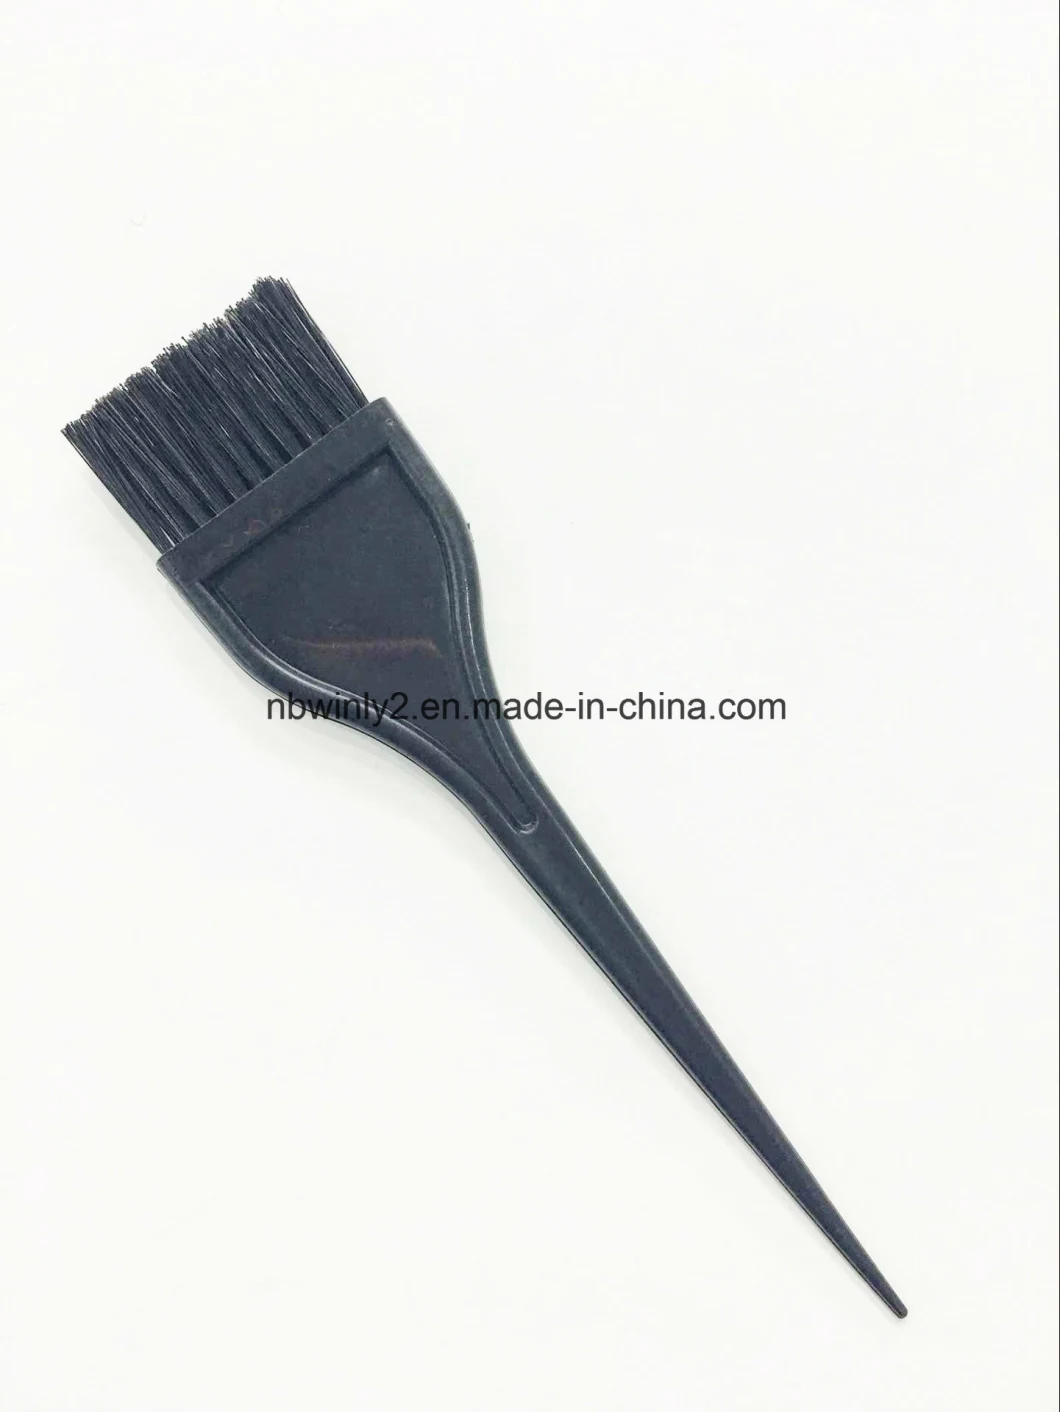 Plastic Hair Dye Brush (WLWA)